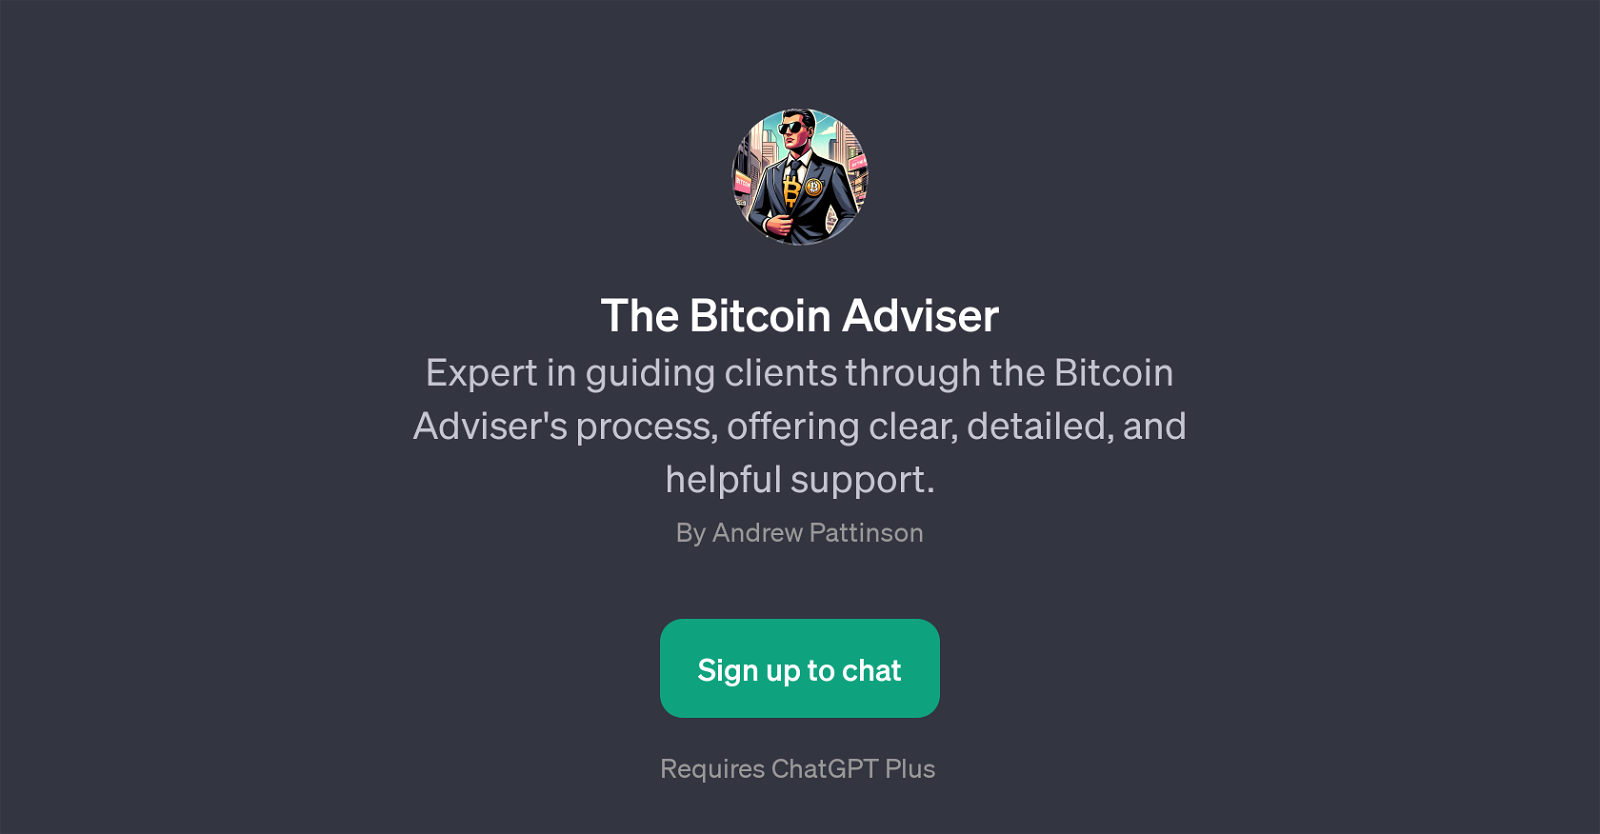 The Bitcoin Adviser website